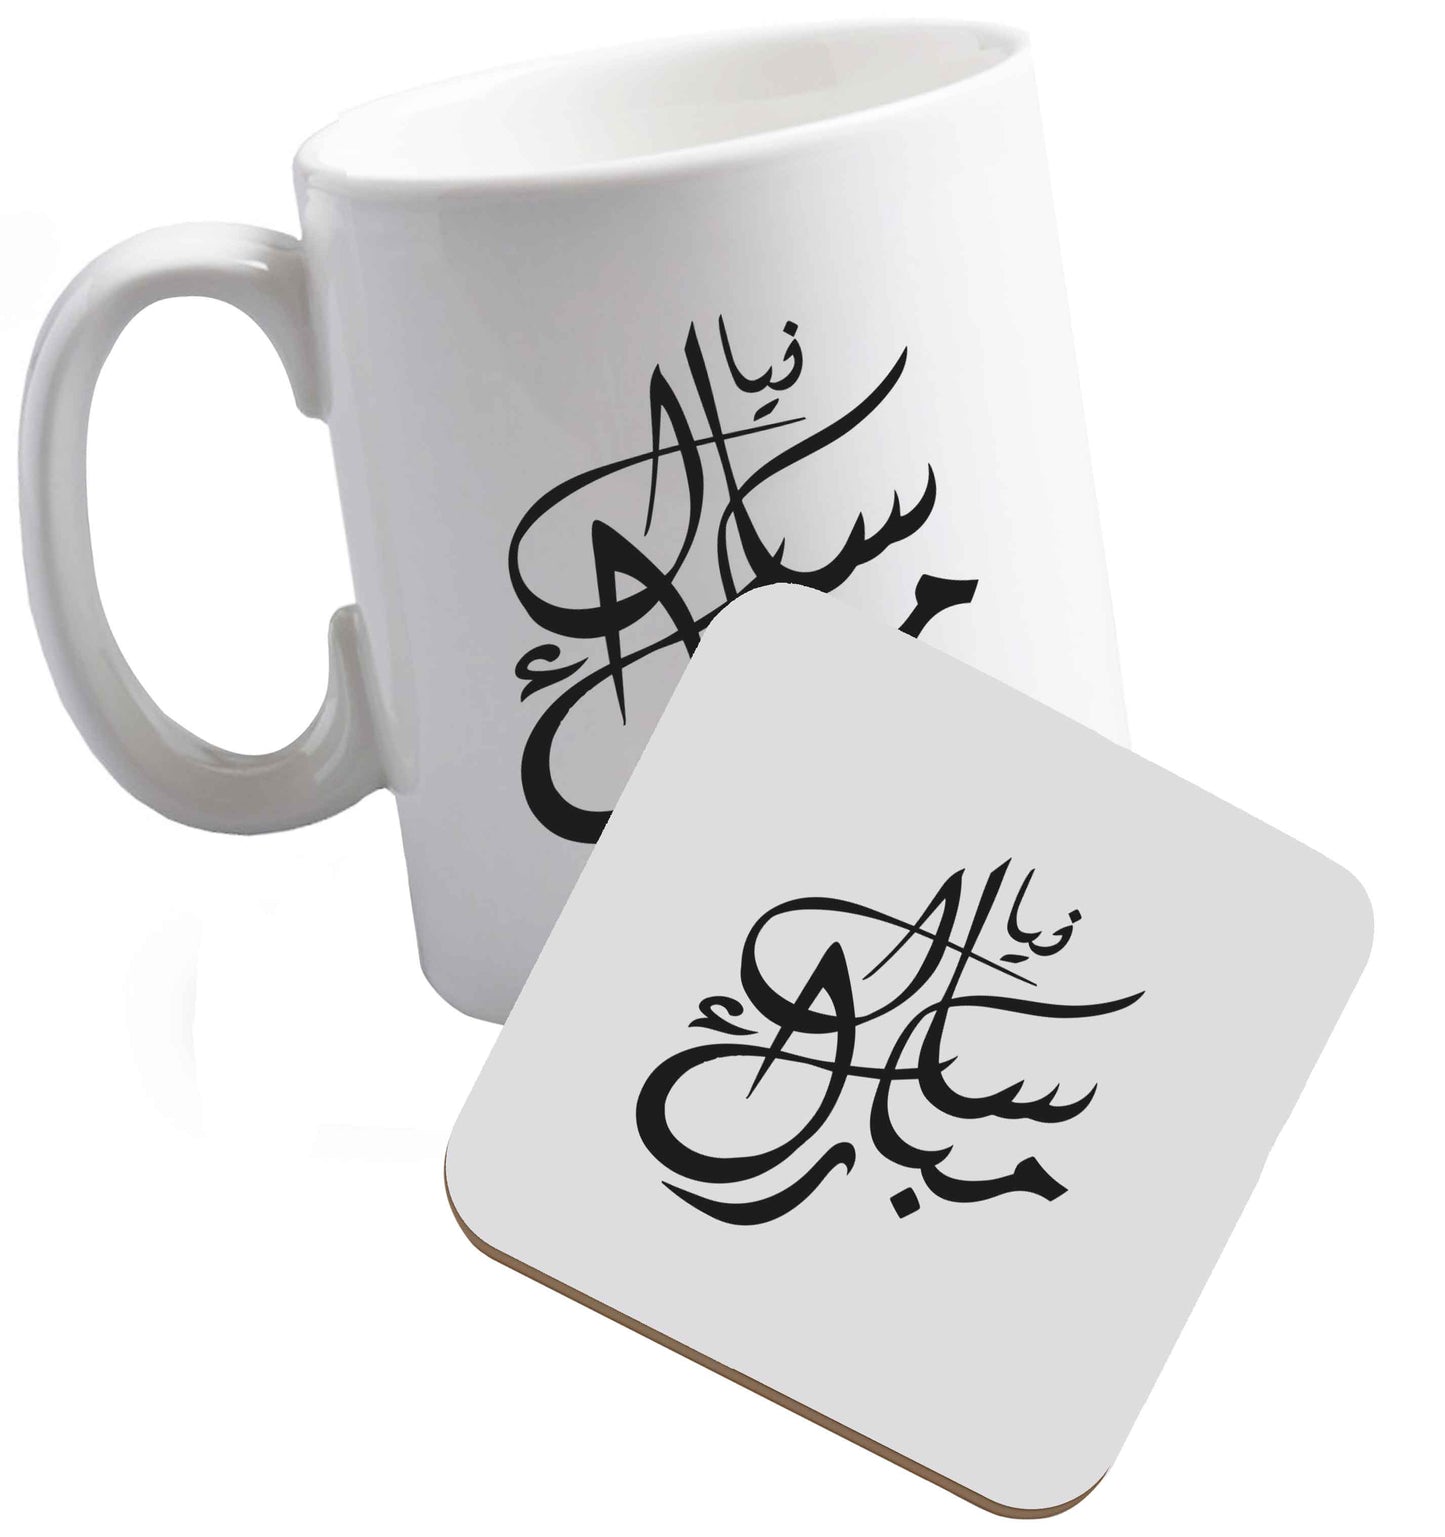 10 oz Urdu Naya saal mubarak ceramic mug and coaster set right handed